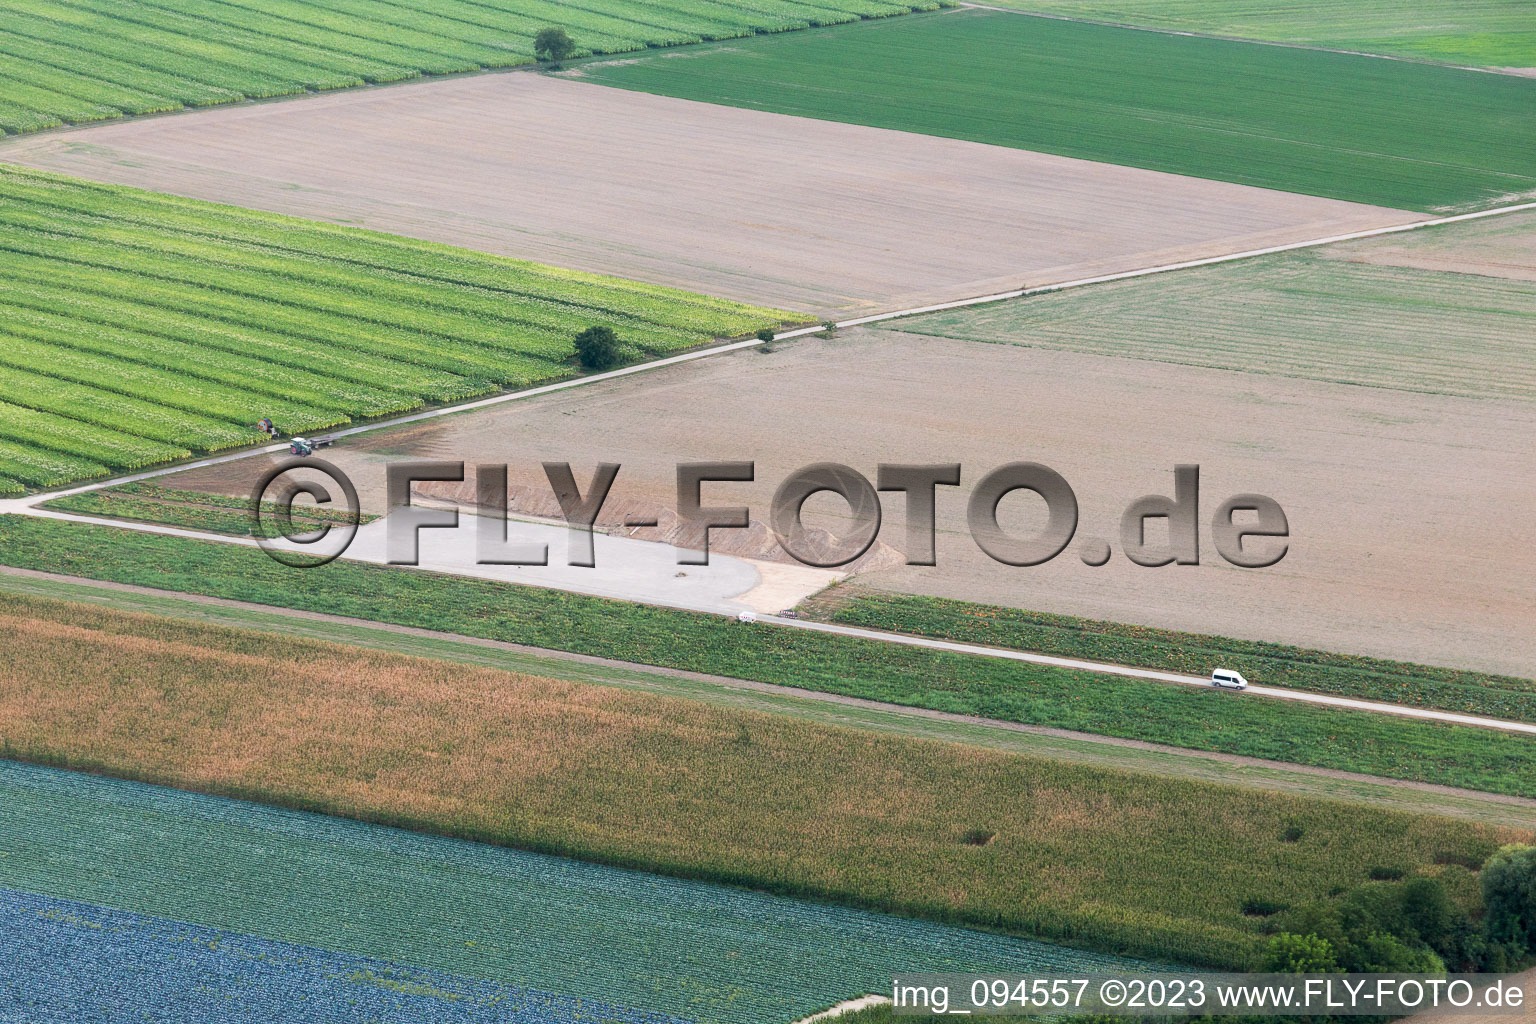 Drone image of Hatzenbühl in the state Rhineland-Palatinate, Germany